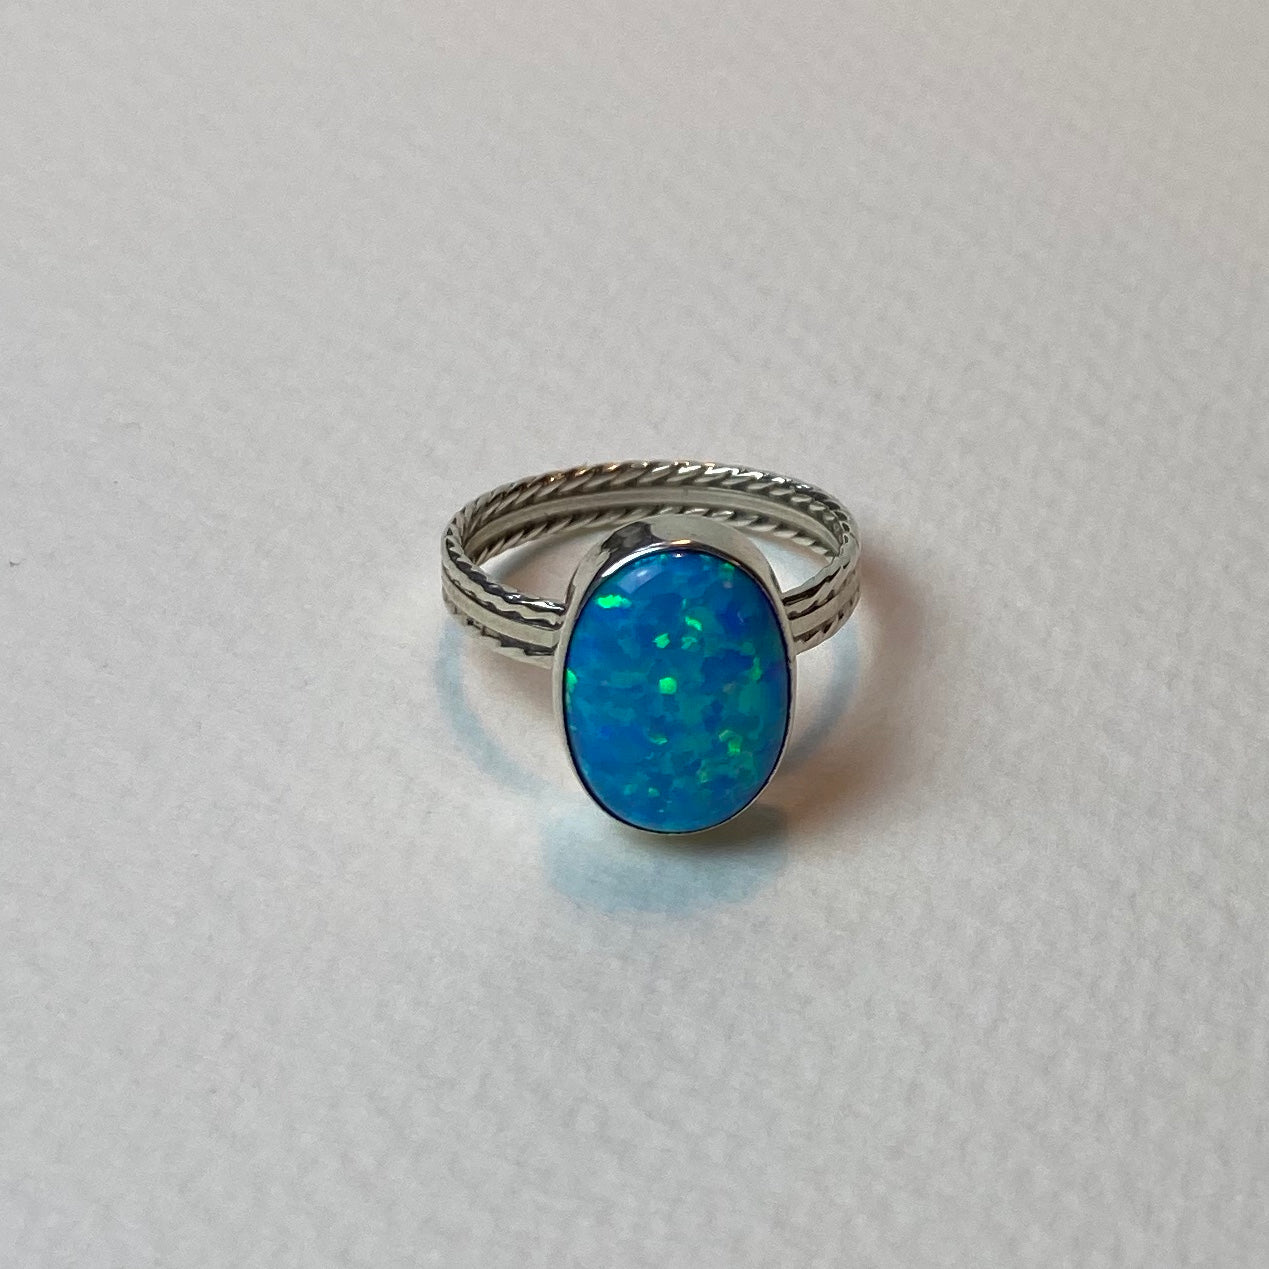 Blue Opal Oval Ring - The Nancy Smillie Shop - Art, Jewellery & Designer Gifts Glasgow